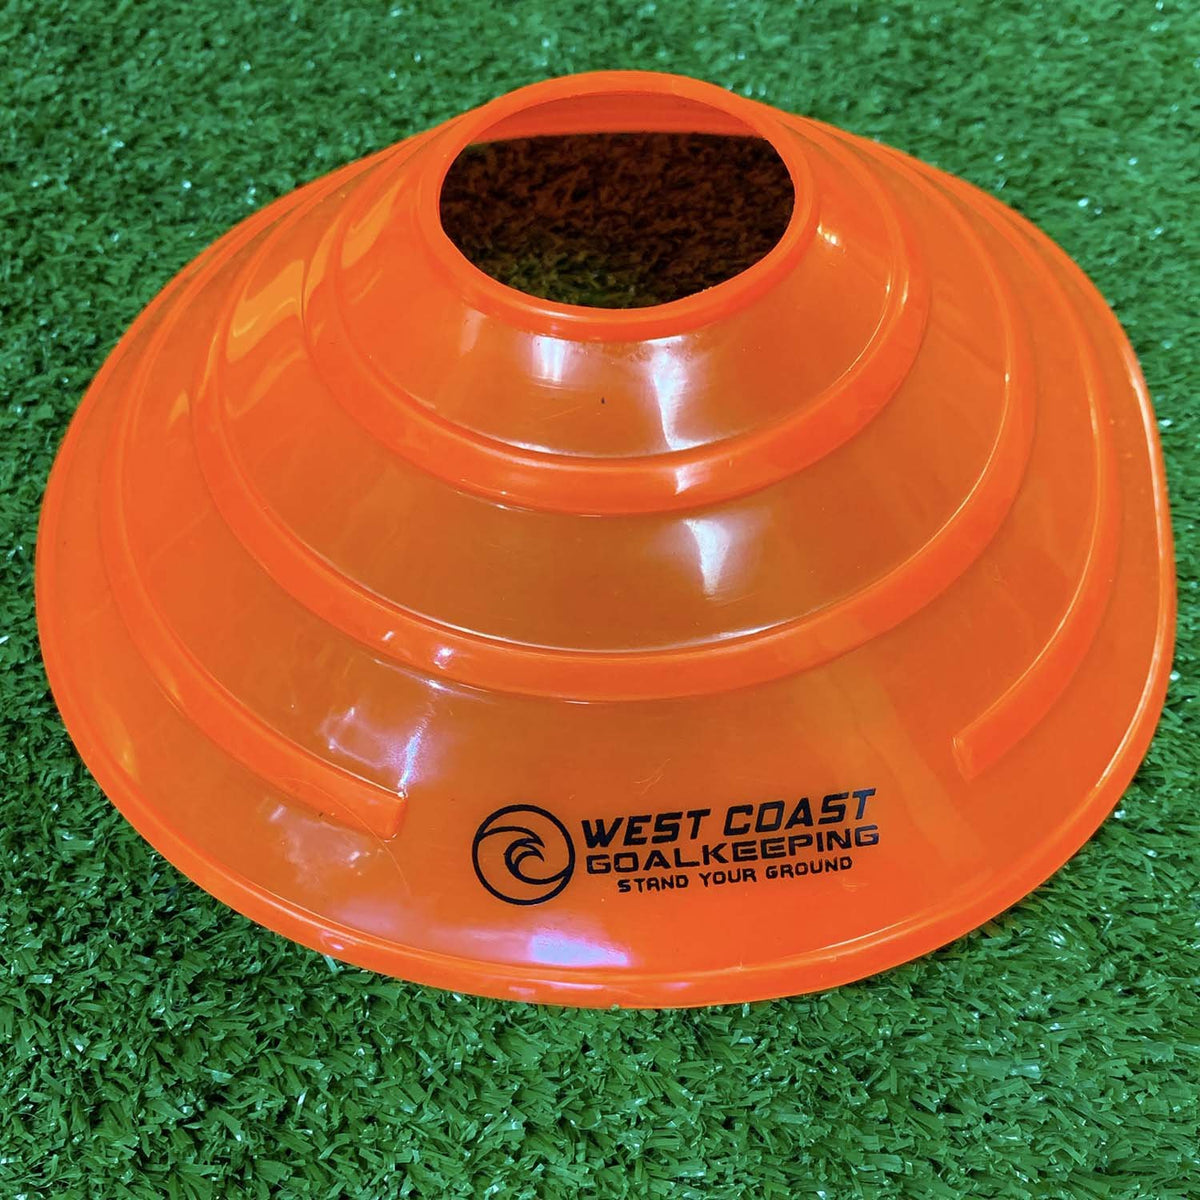 Training Cones 20 Pack - West Coast Goalkeeping